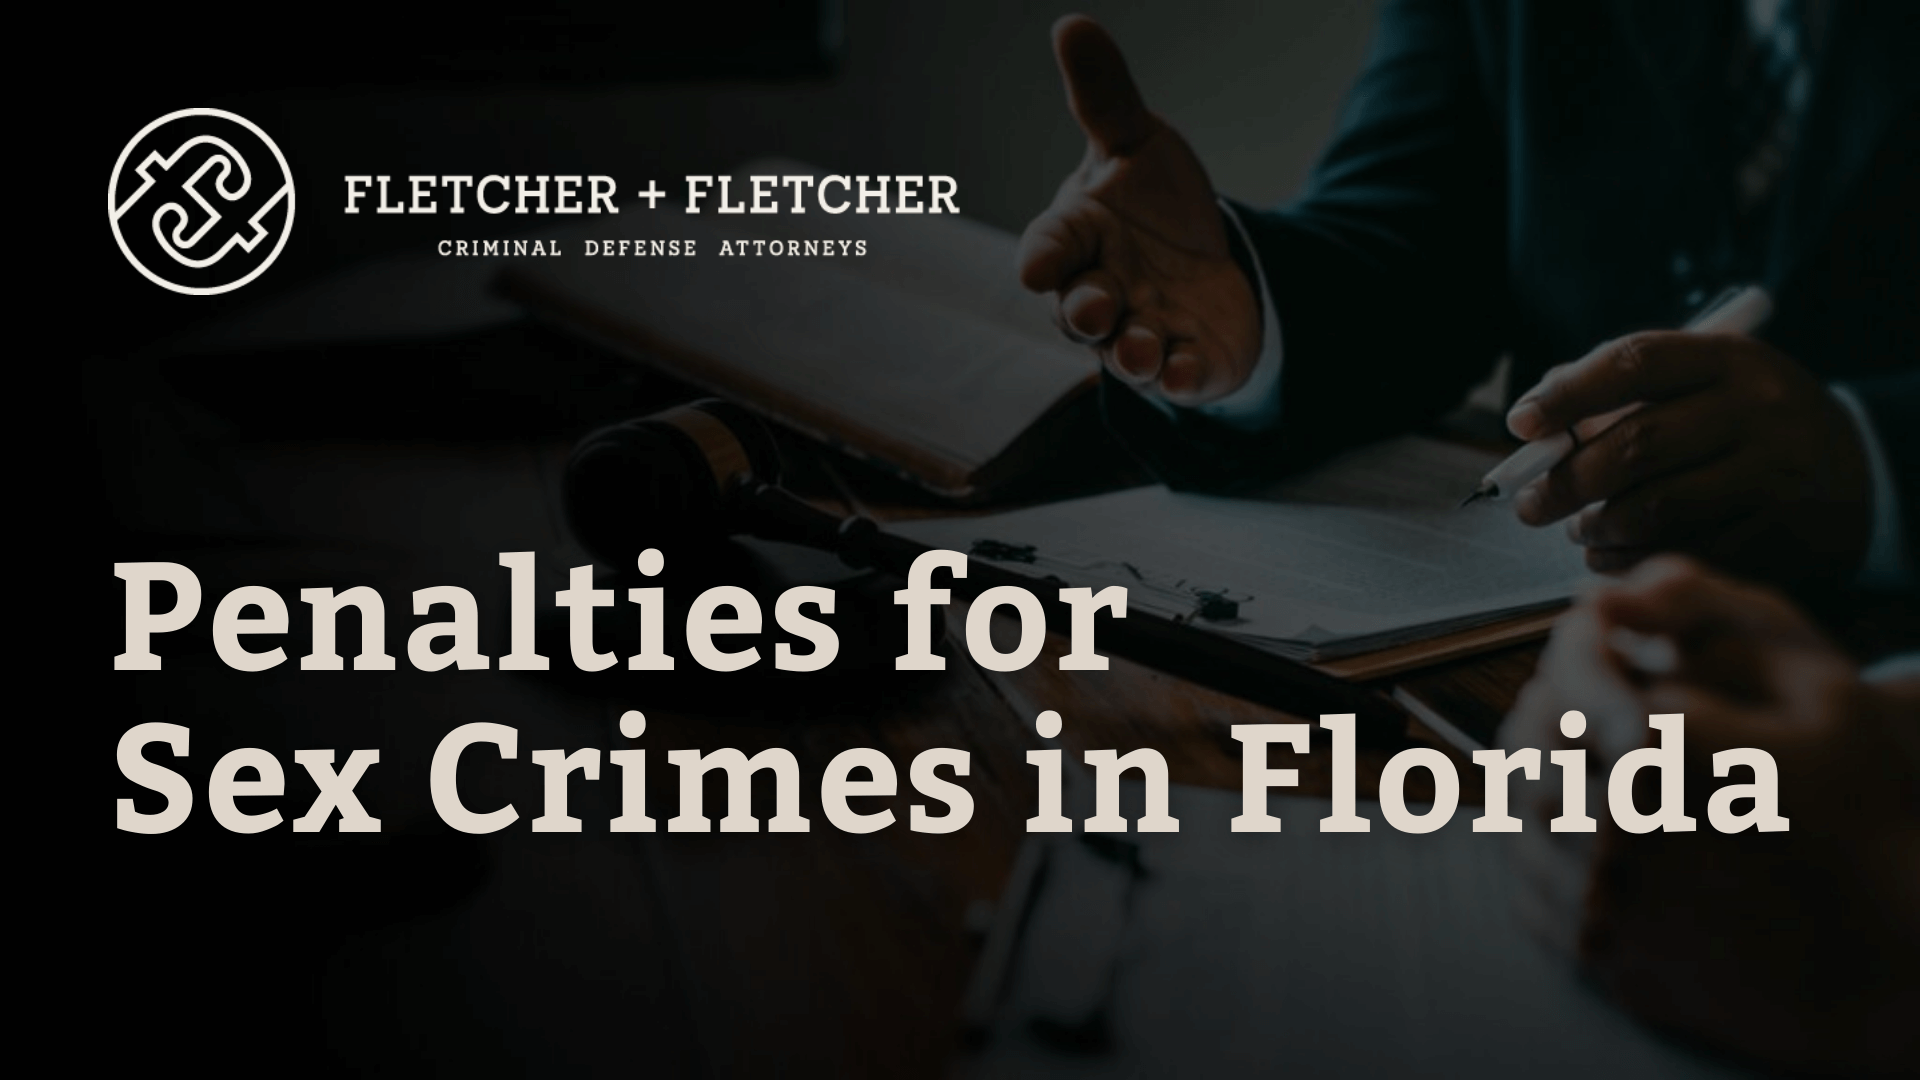 Penalties for Sex Crimes in Florida - fletcher and fletcher - st petersburg florida criminal defense